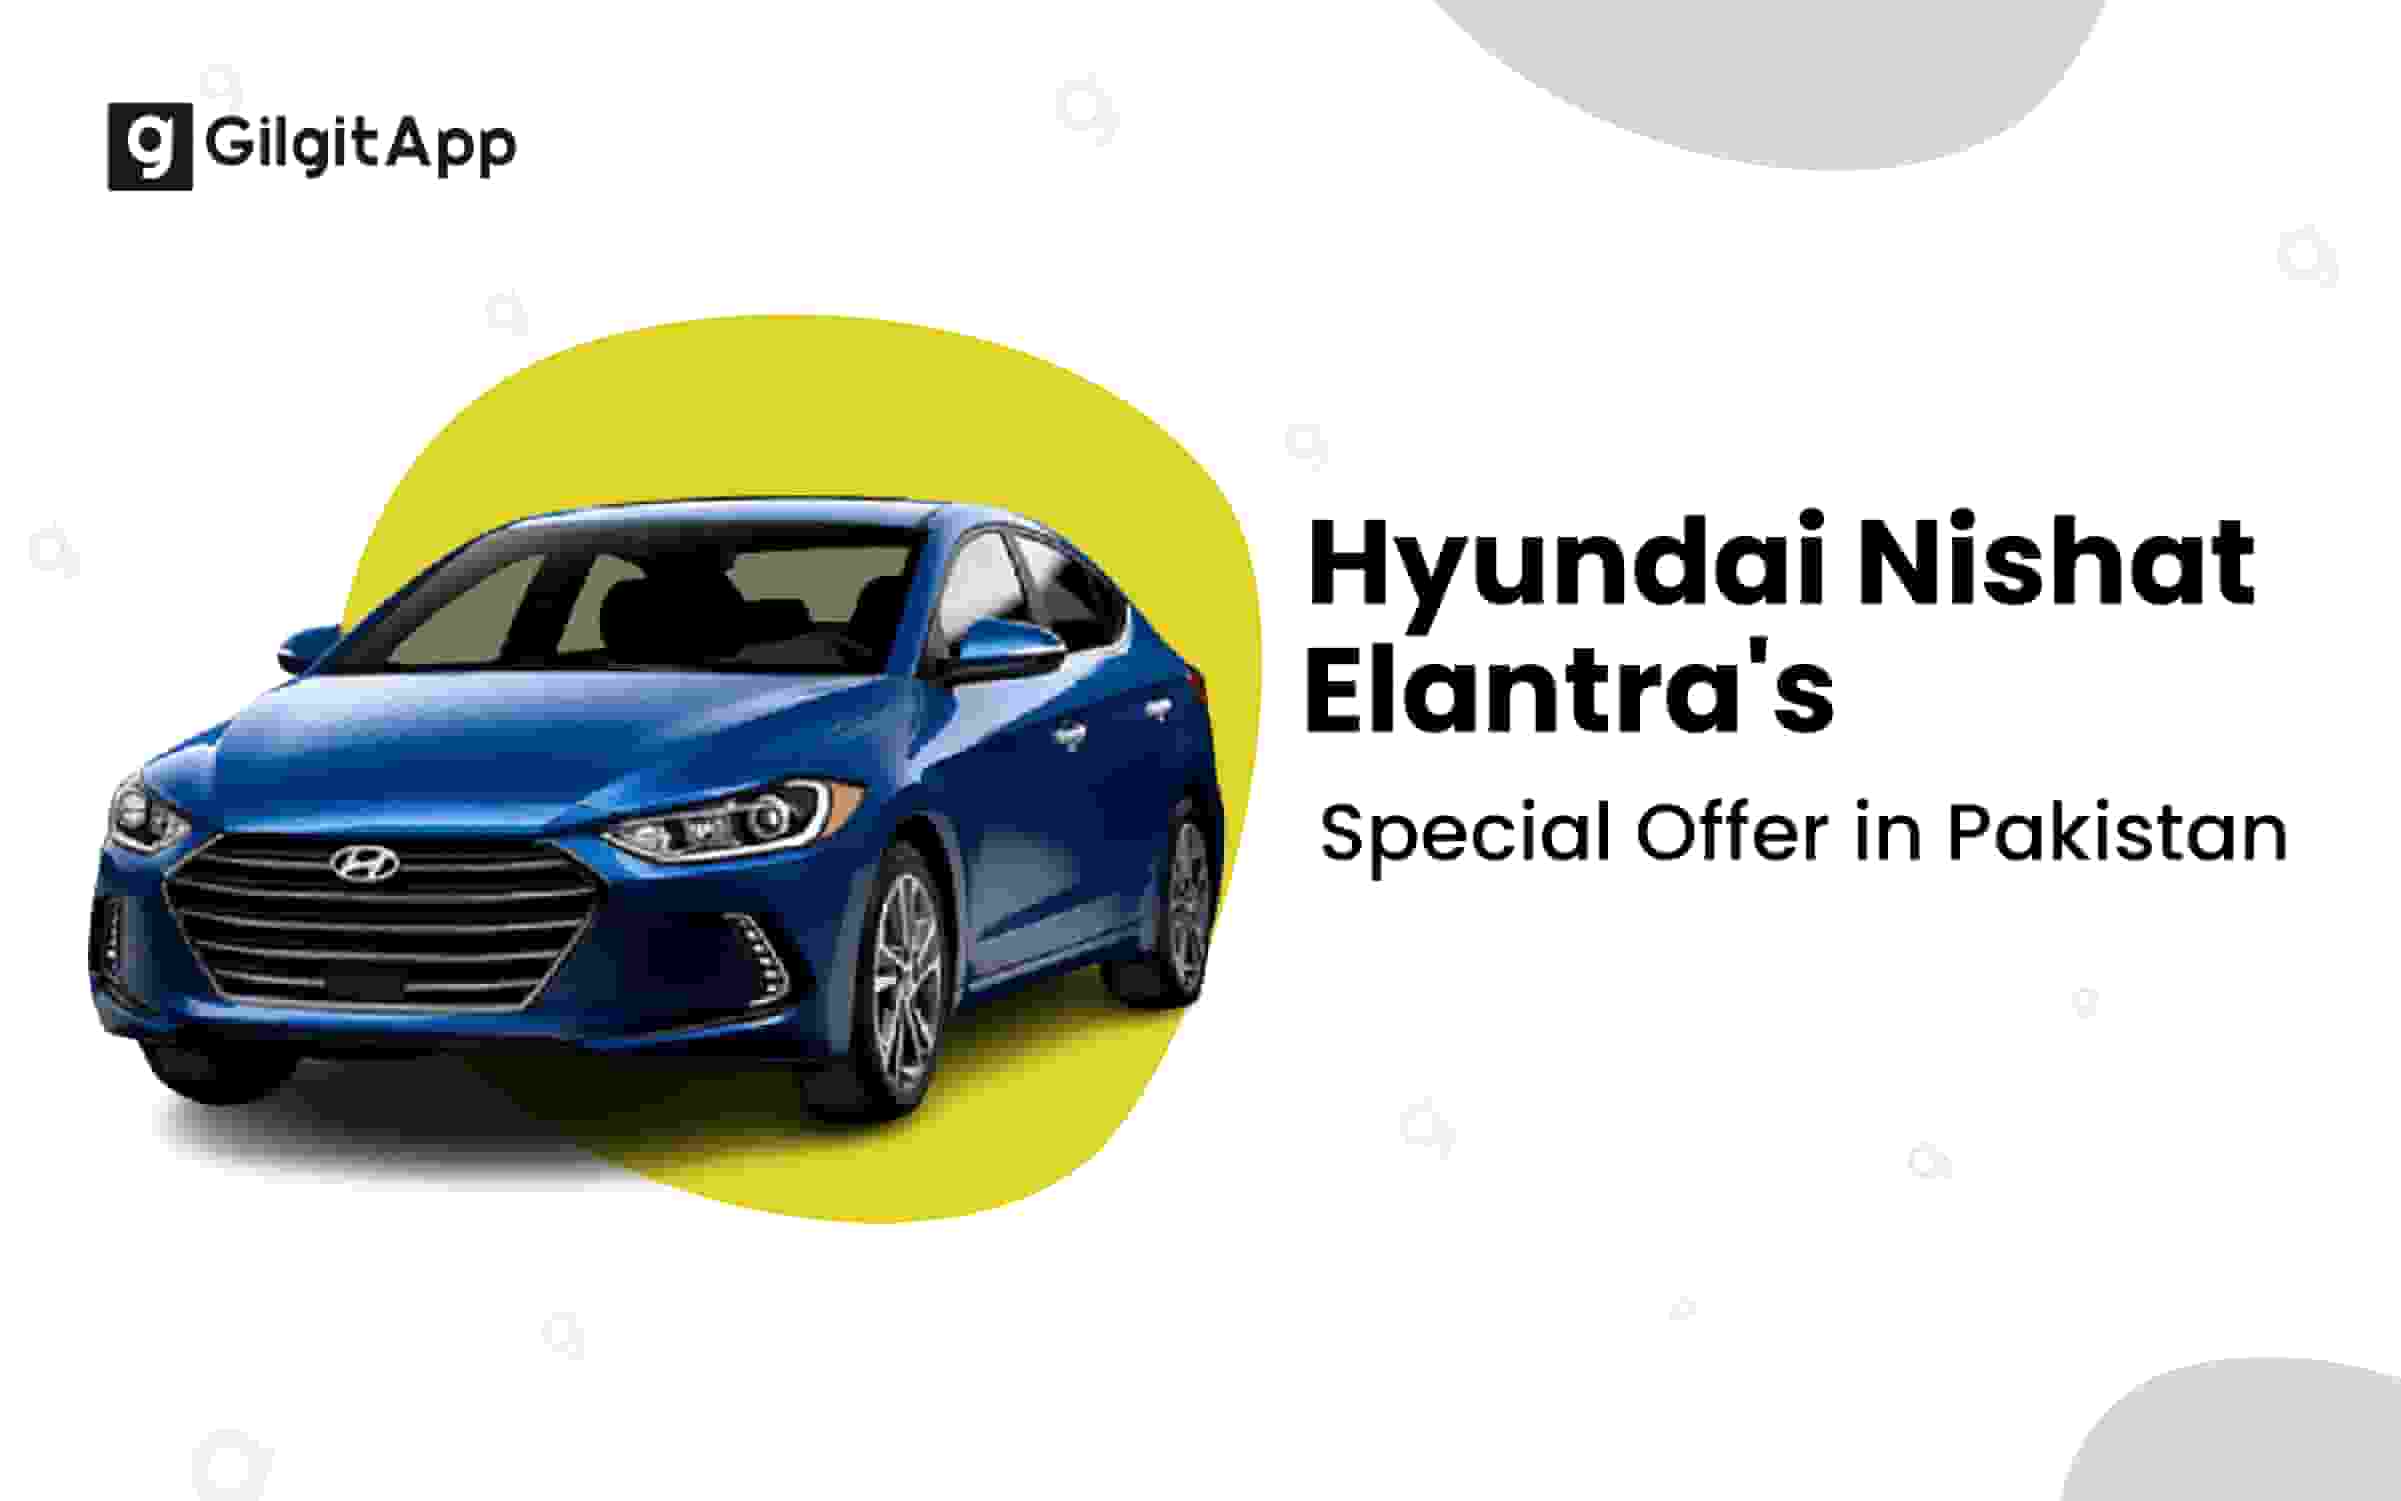 Hyundai Nishat Elantra's Special Offer in Pakistan